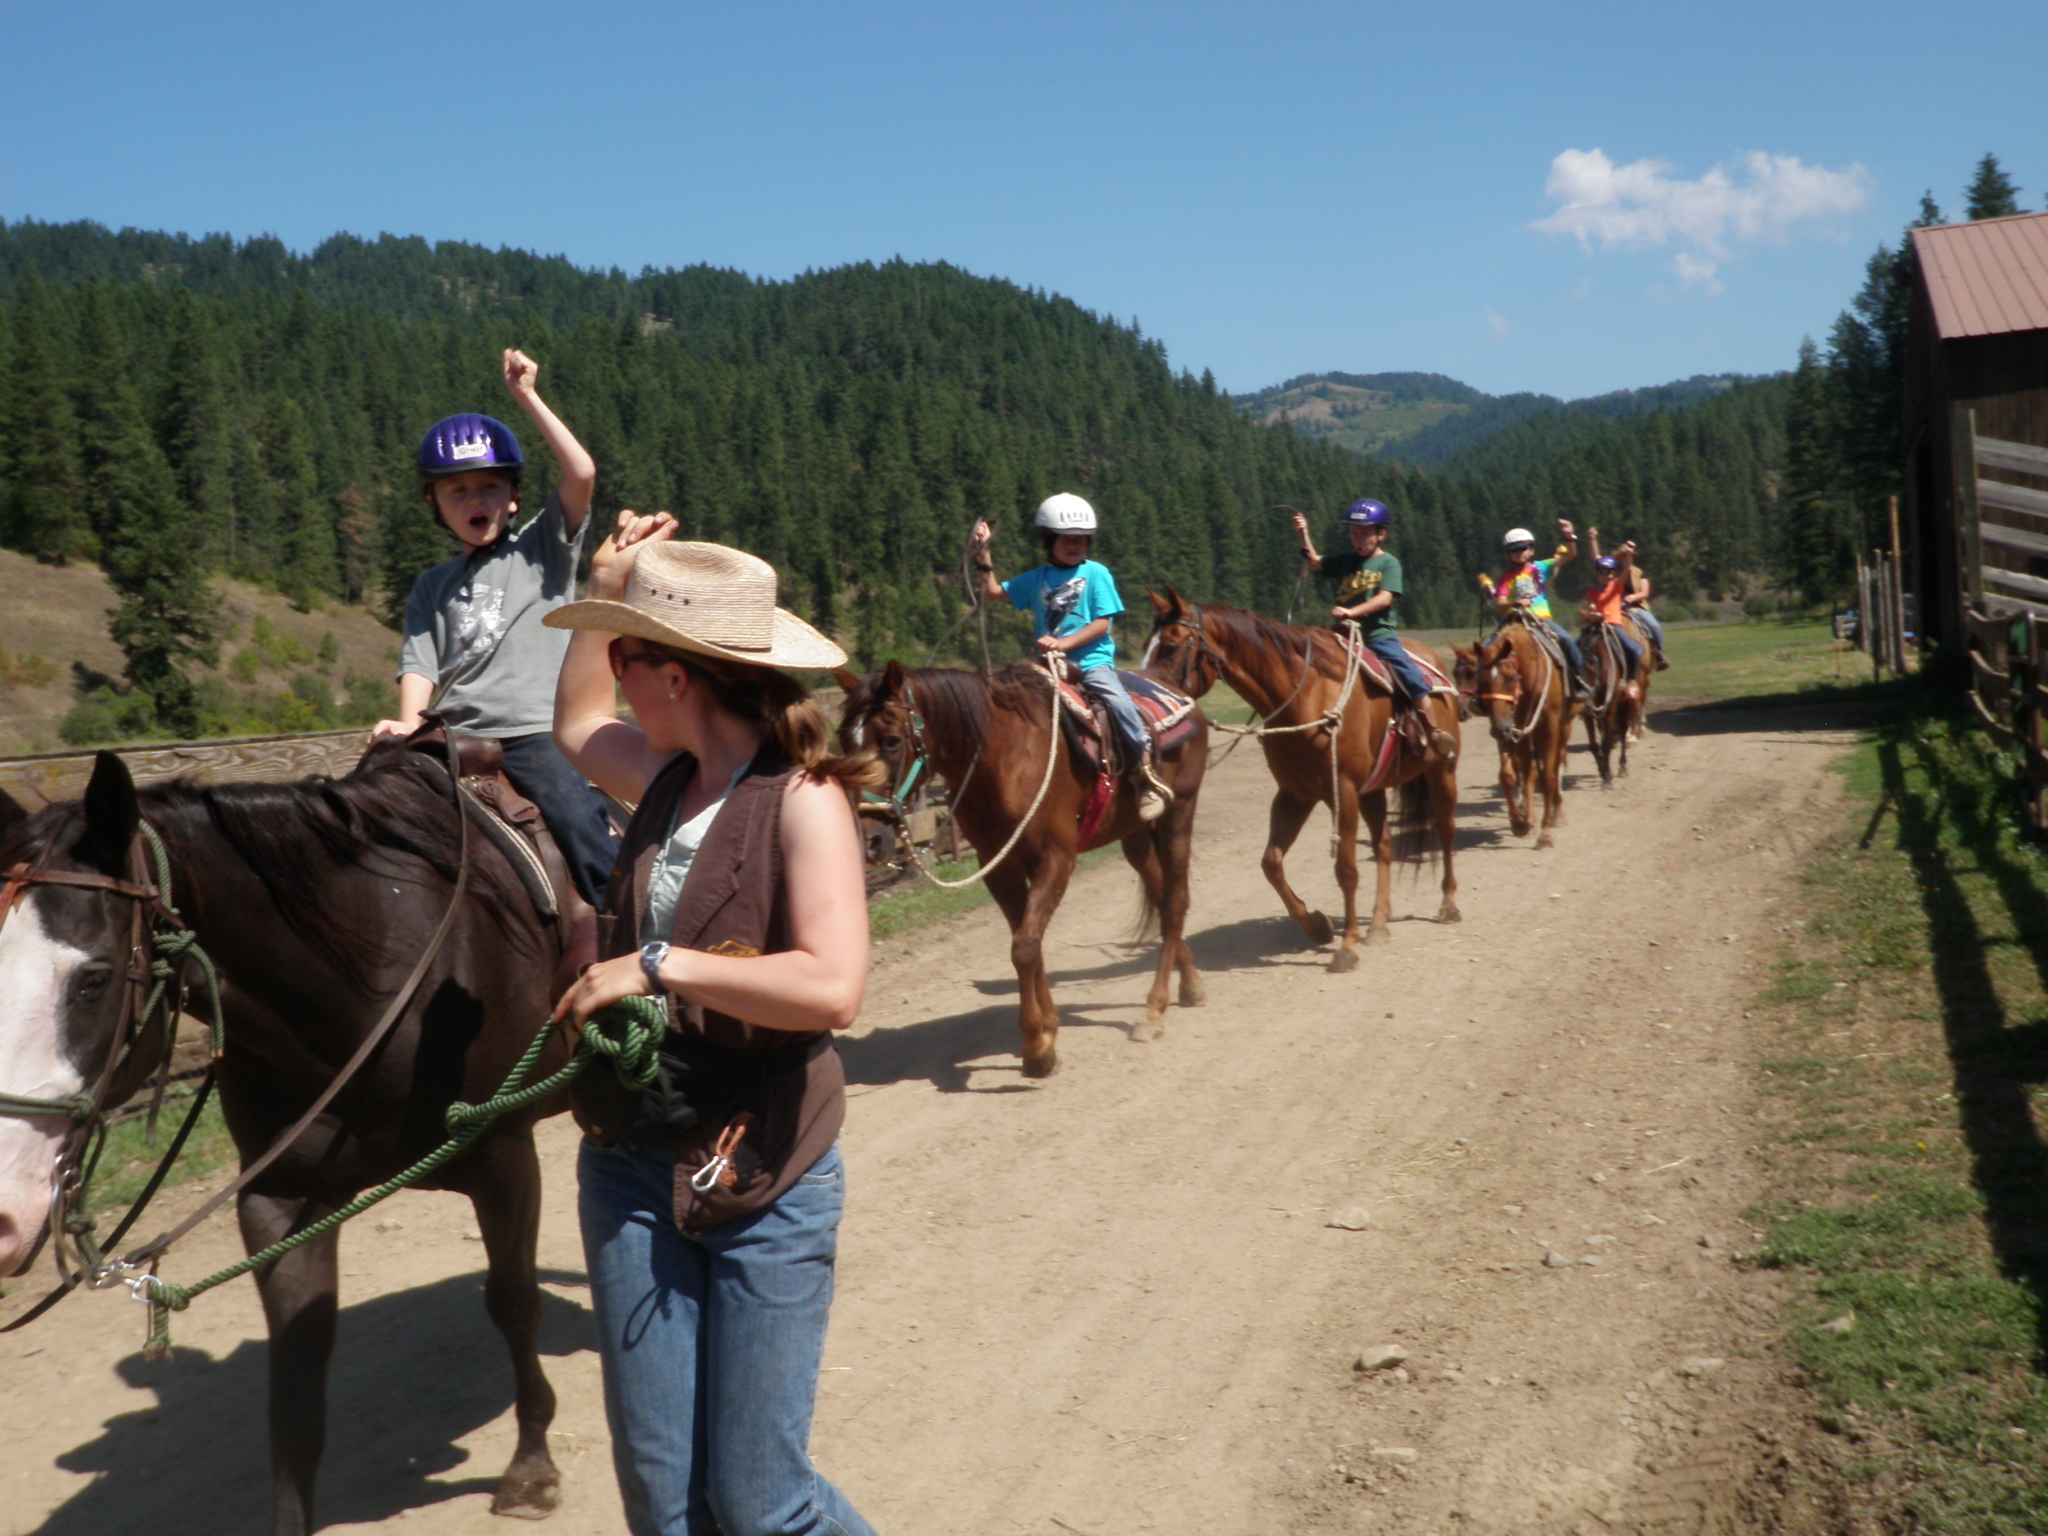 Group on horseback trail ride.